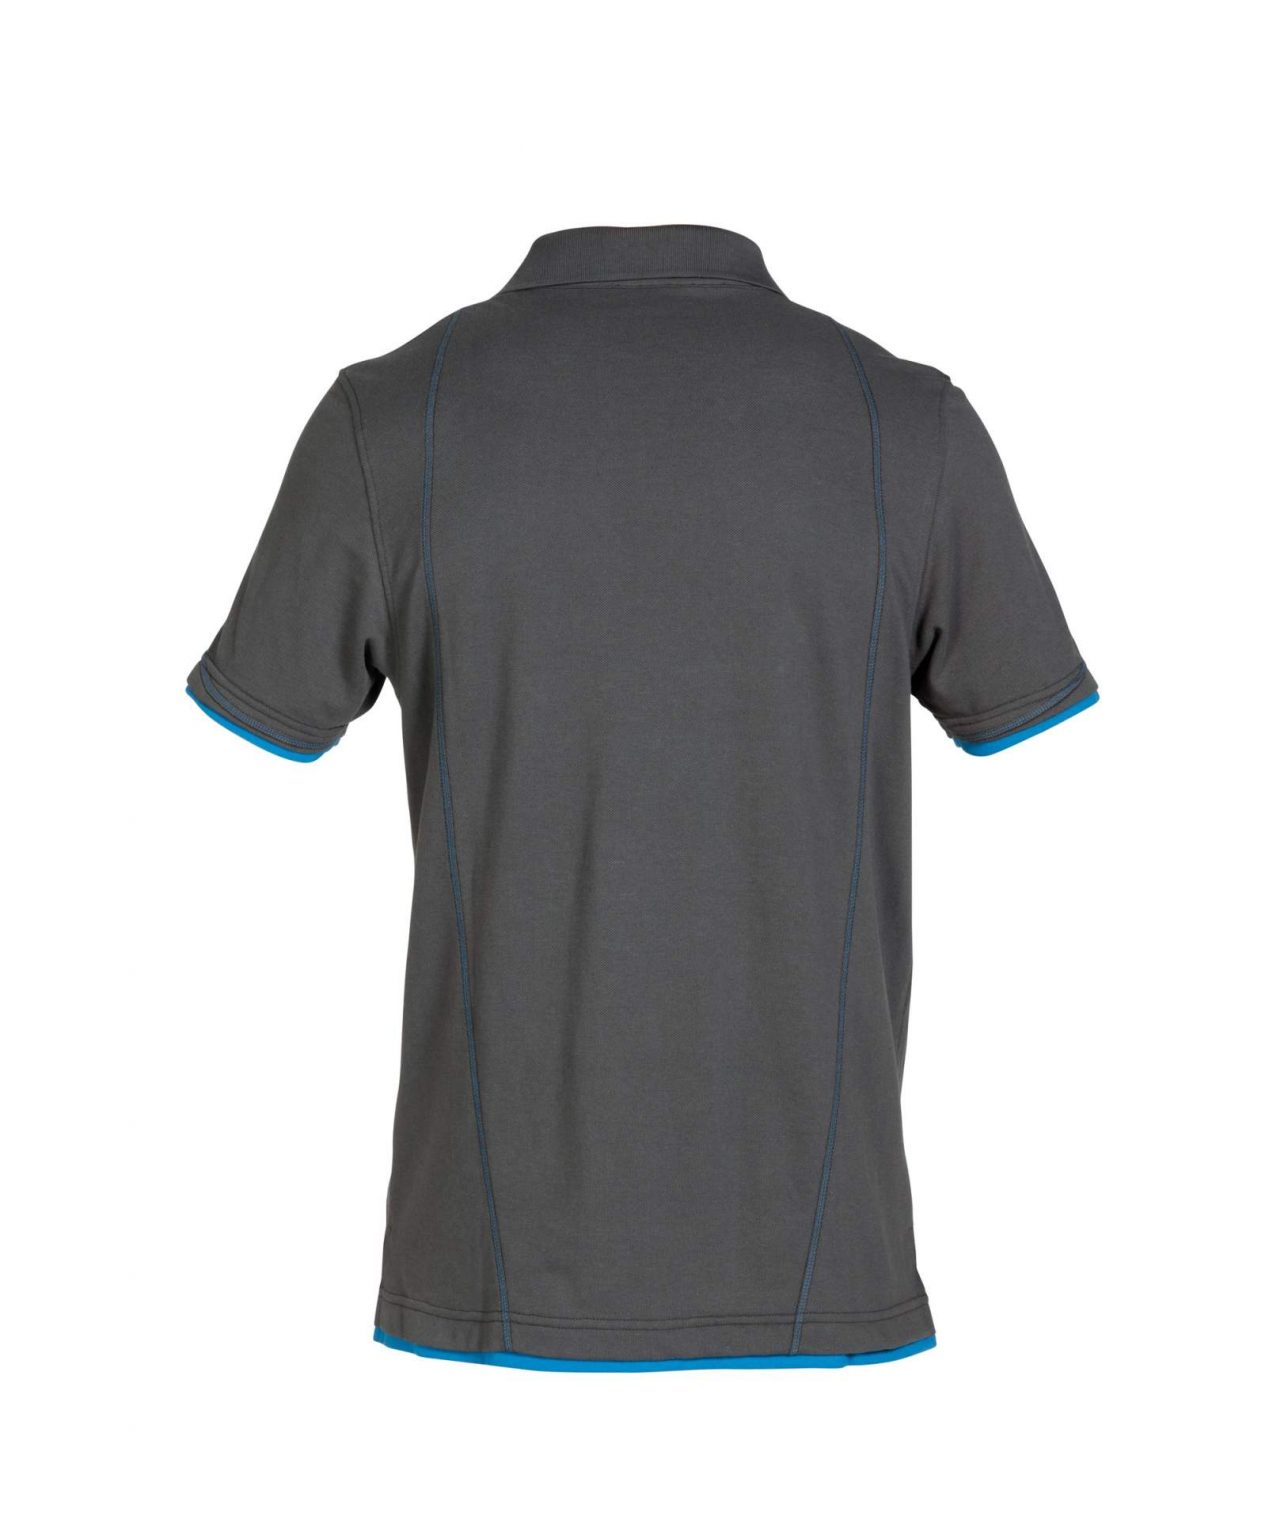 orbital polo shirt anthracite grey azure blue back